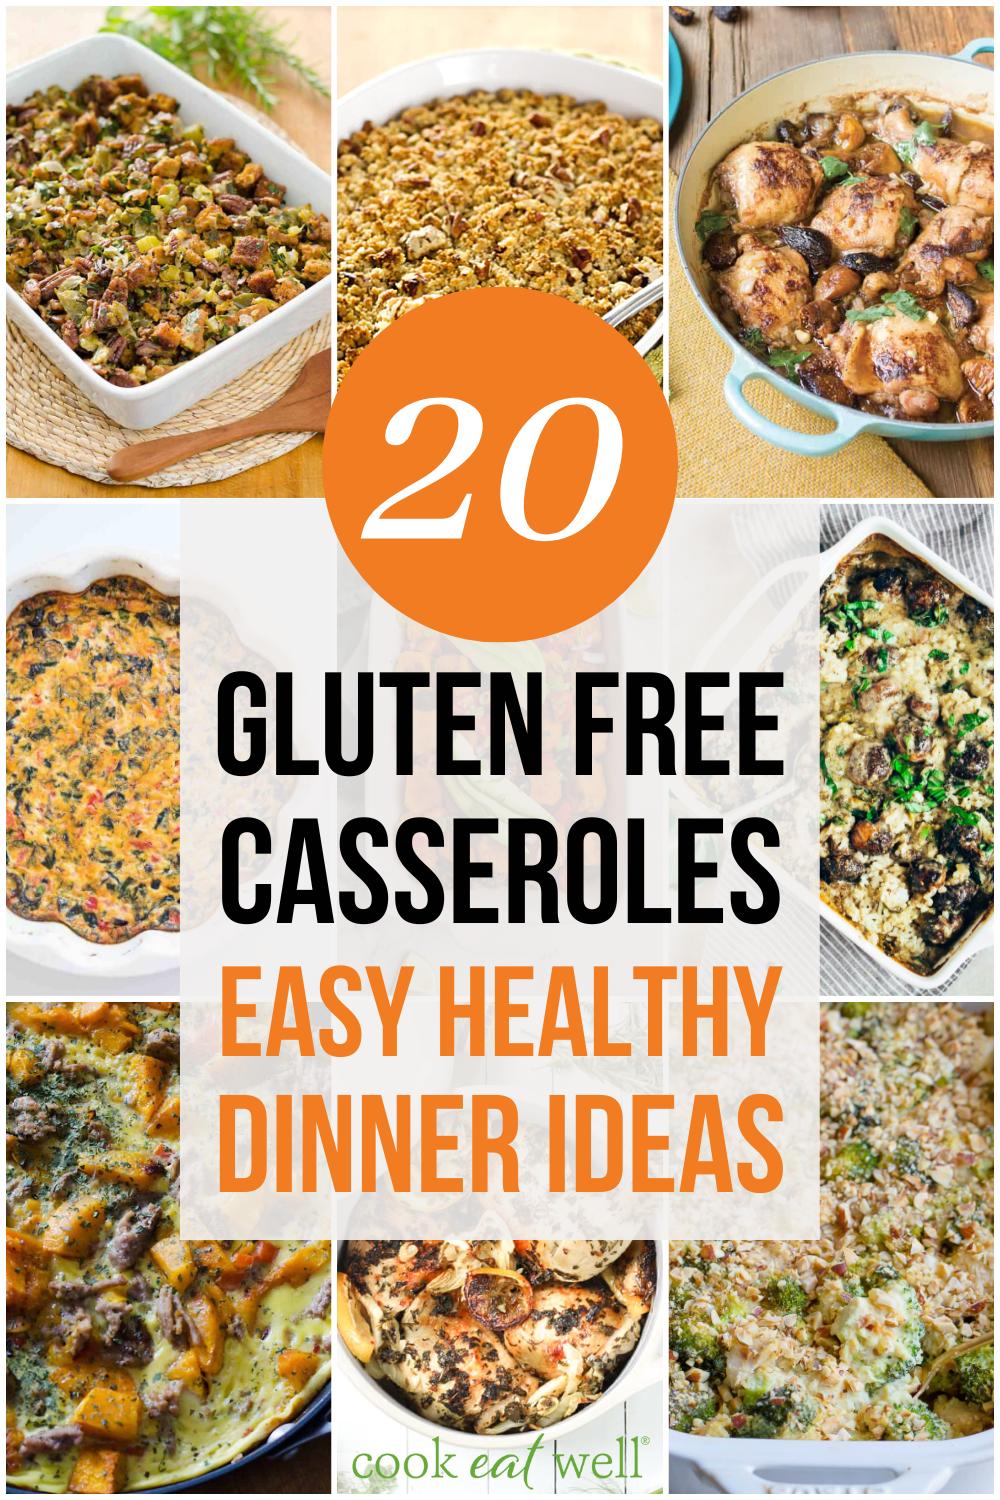 20 Gluten free casseroles - easy healthy dinner ideas